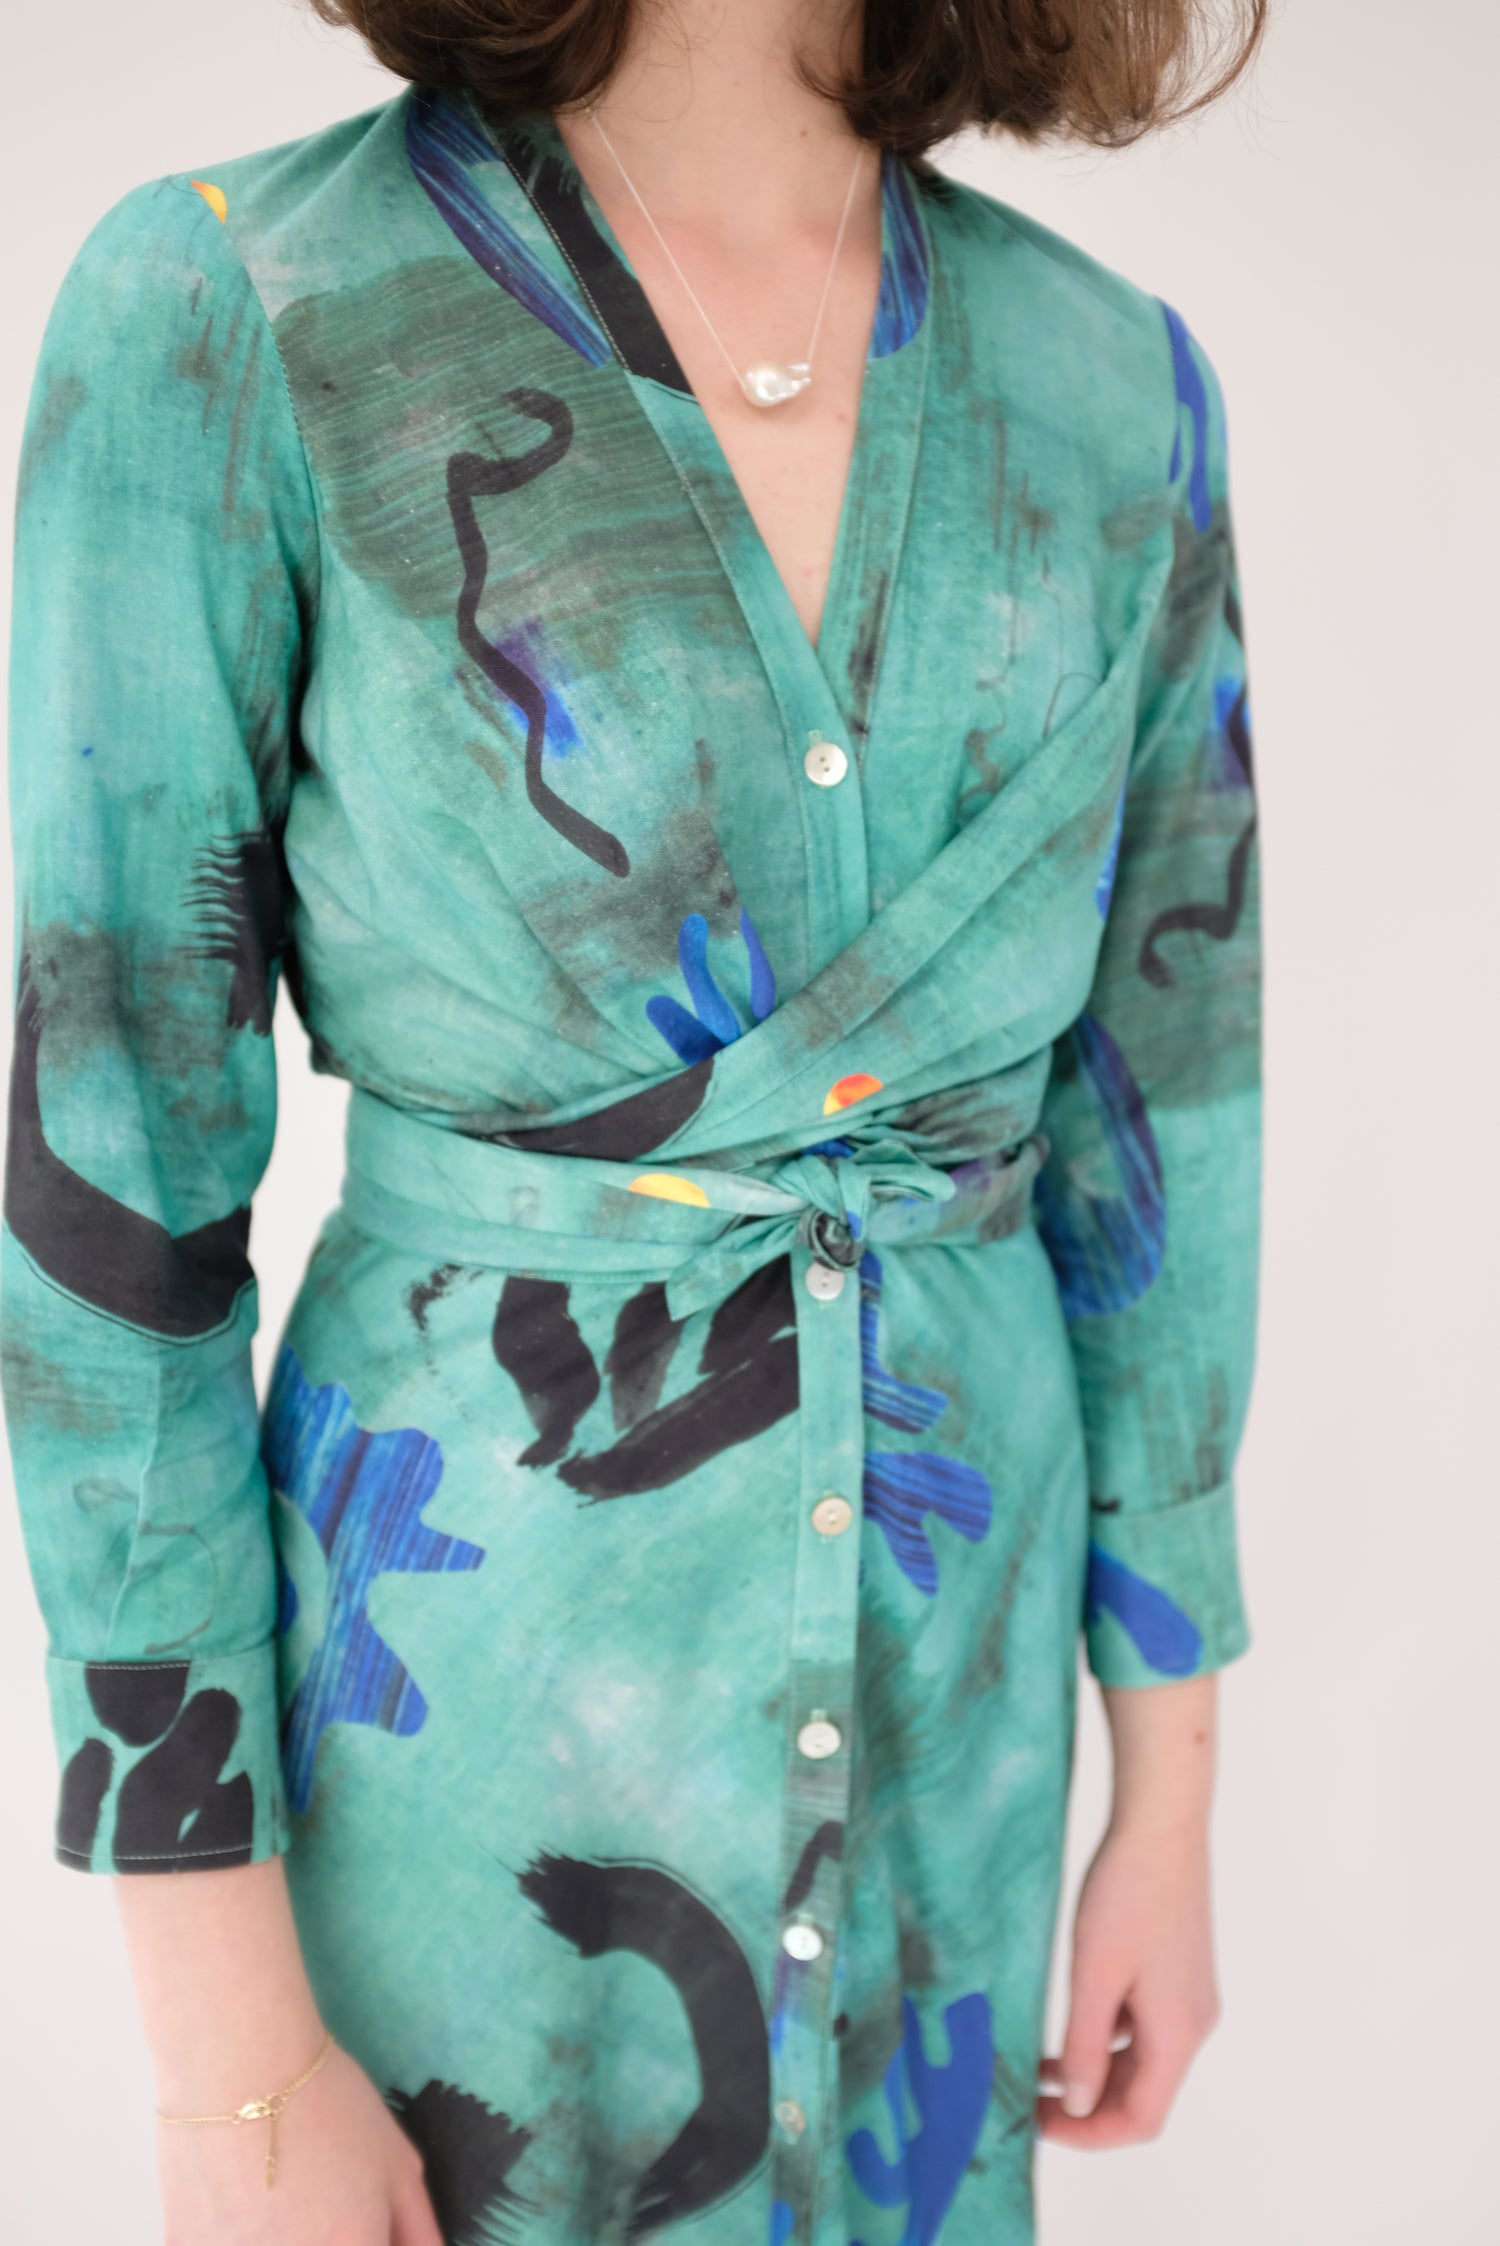 Heinui Leonard Dress Green Collage Print